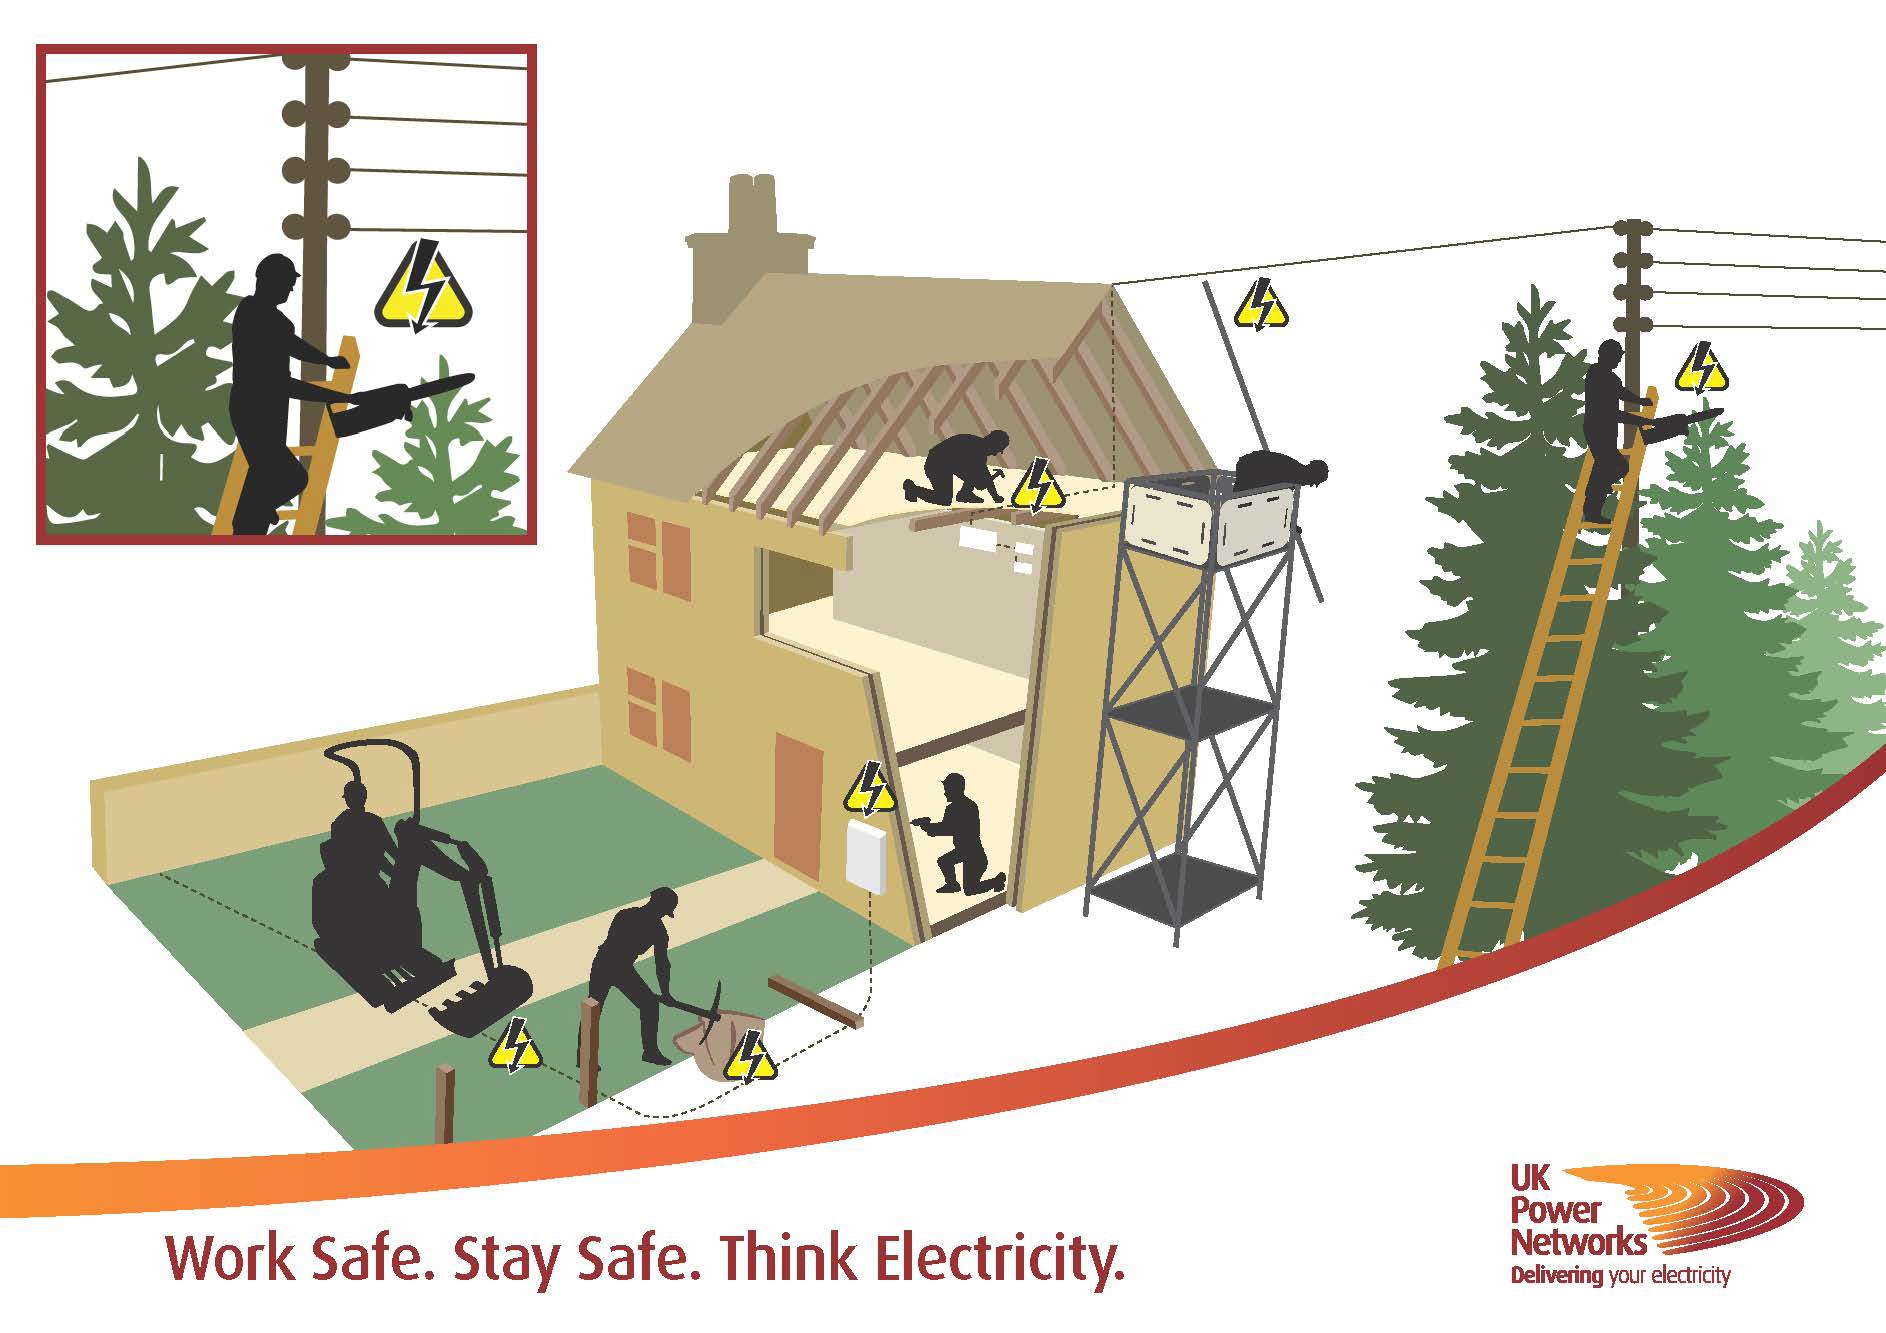 Works Safe. Stay Safe. Think Electricity